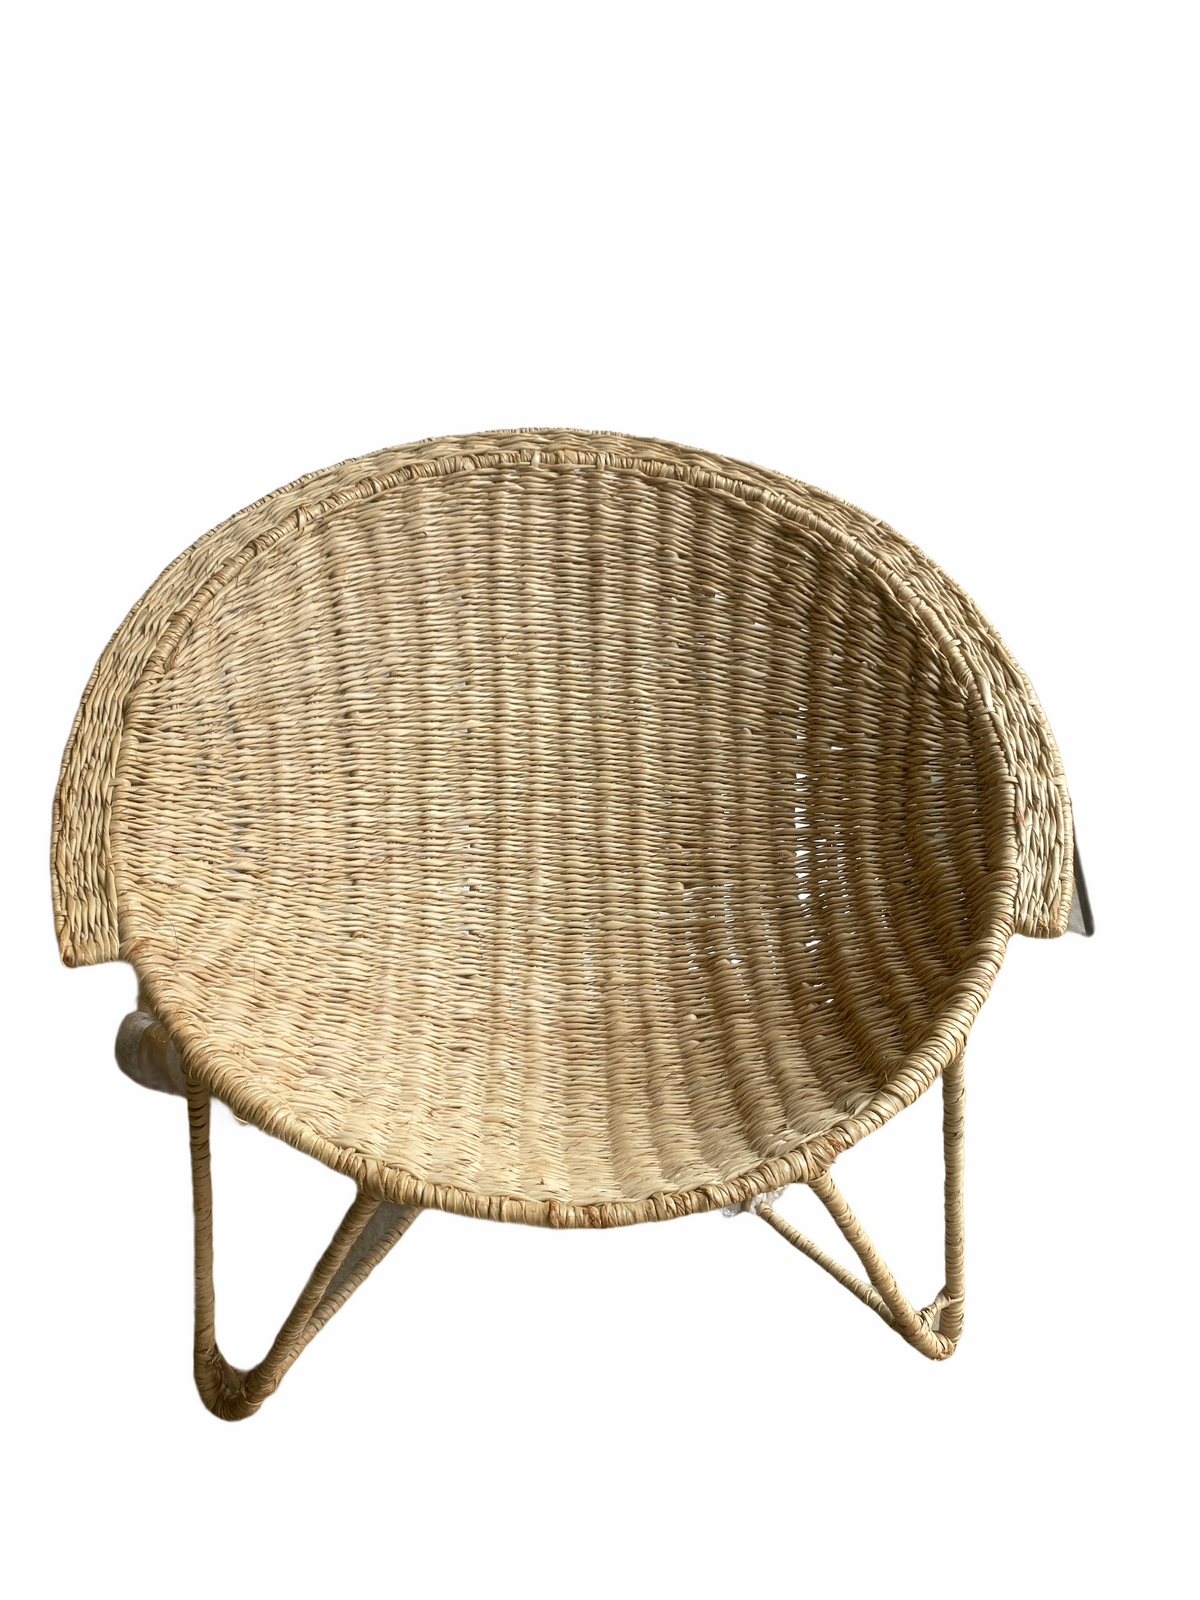 Handwoven Sun Chair - Mozambique